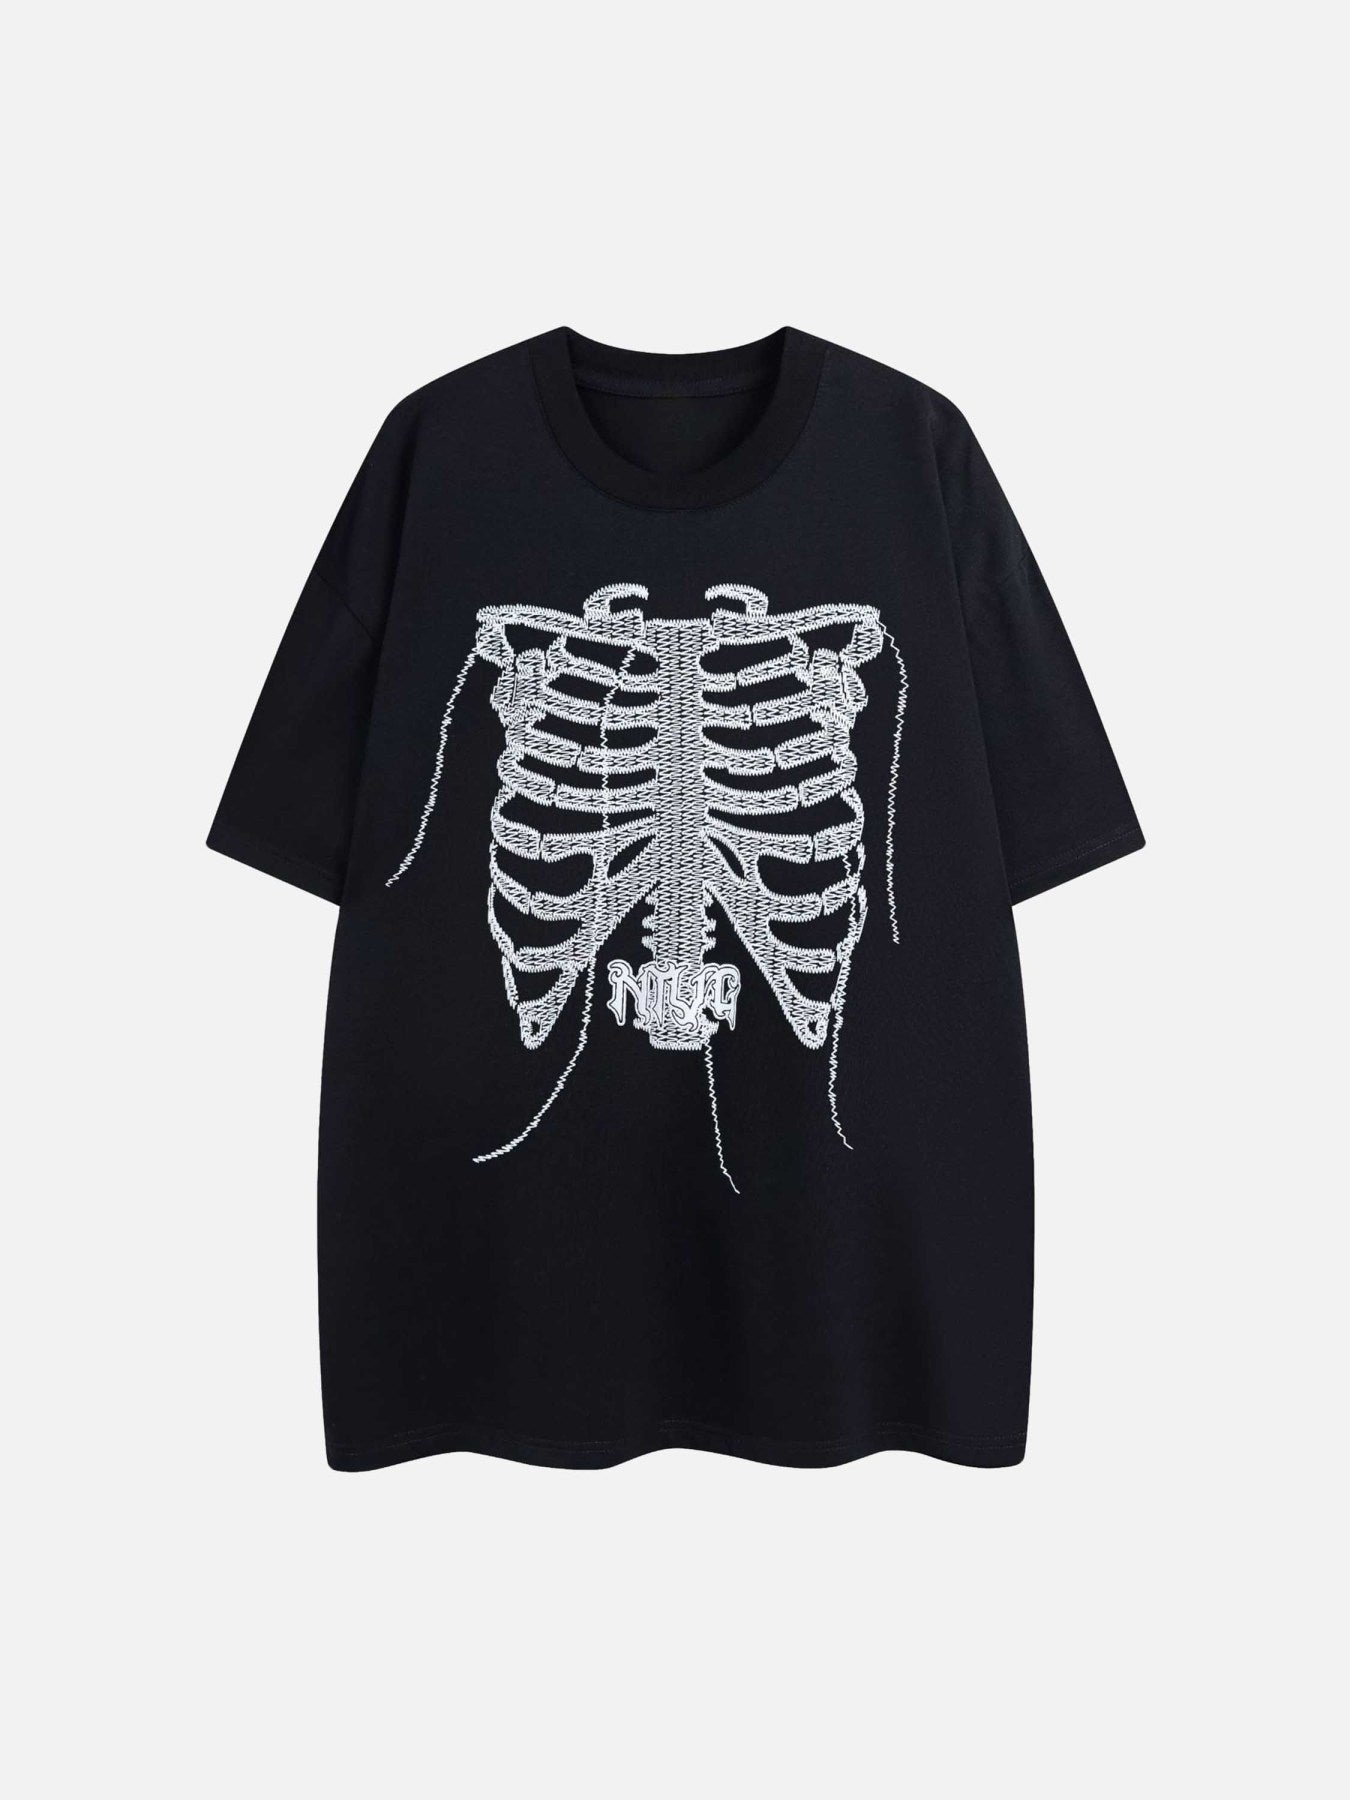 The Supermade Hip Hop Skeleton Printed T-Shirt